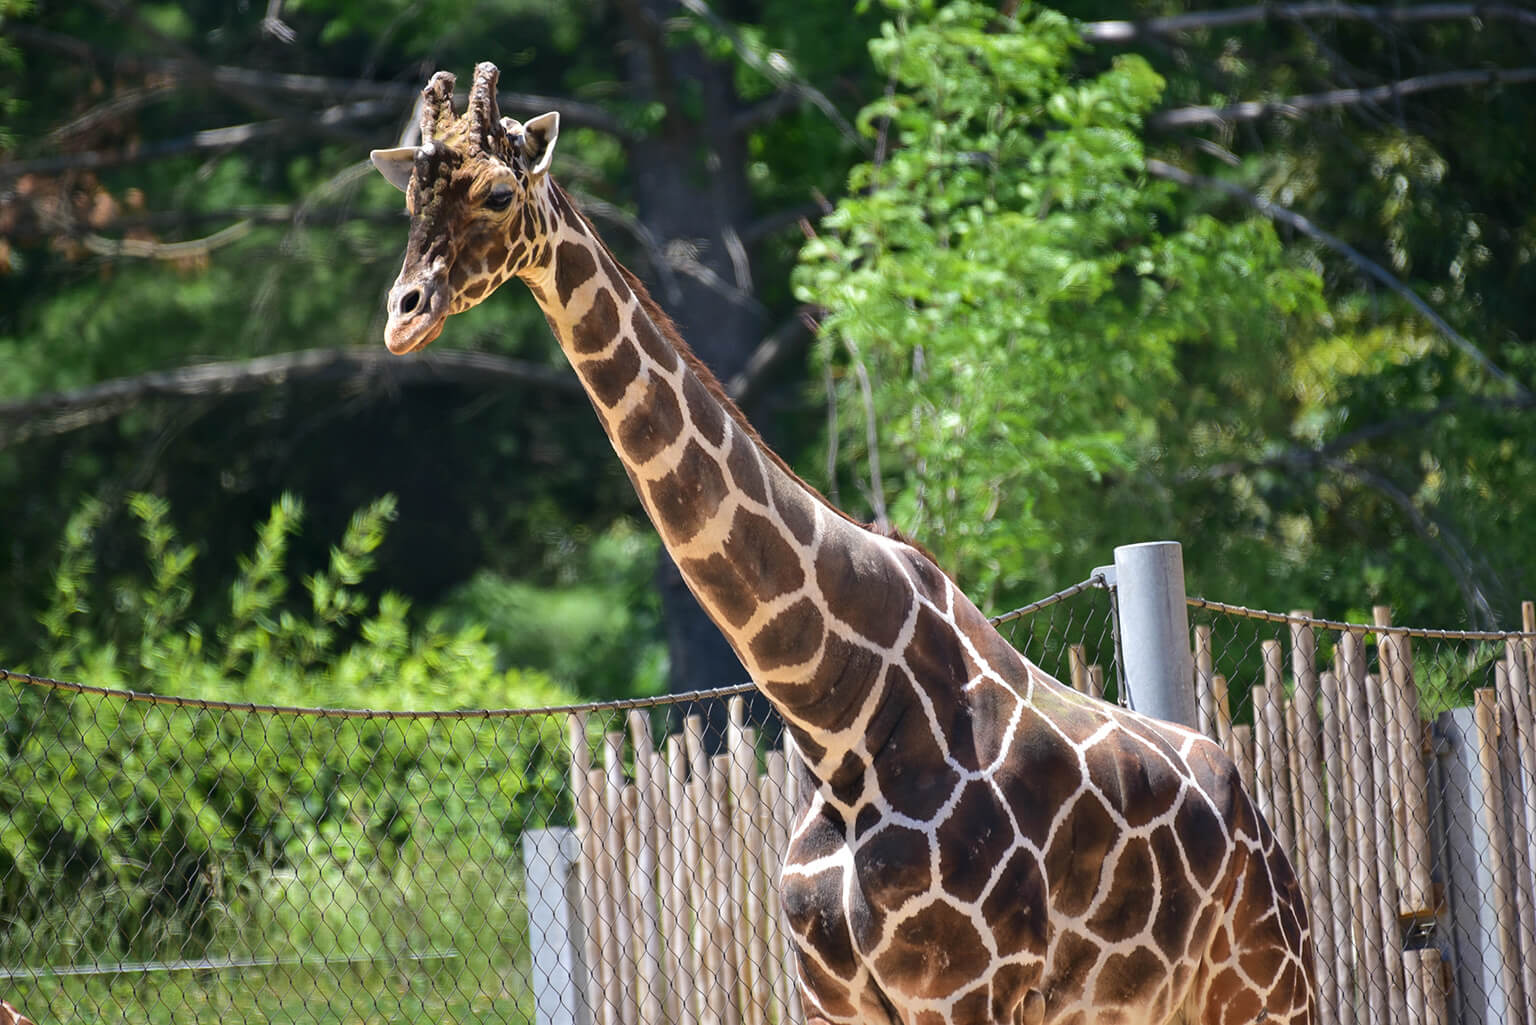 Reticulated Giraffe | The Maryland Zoo